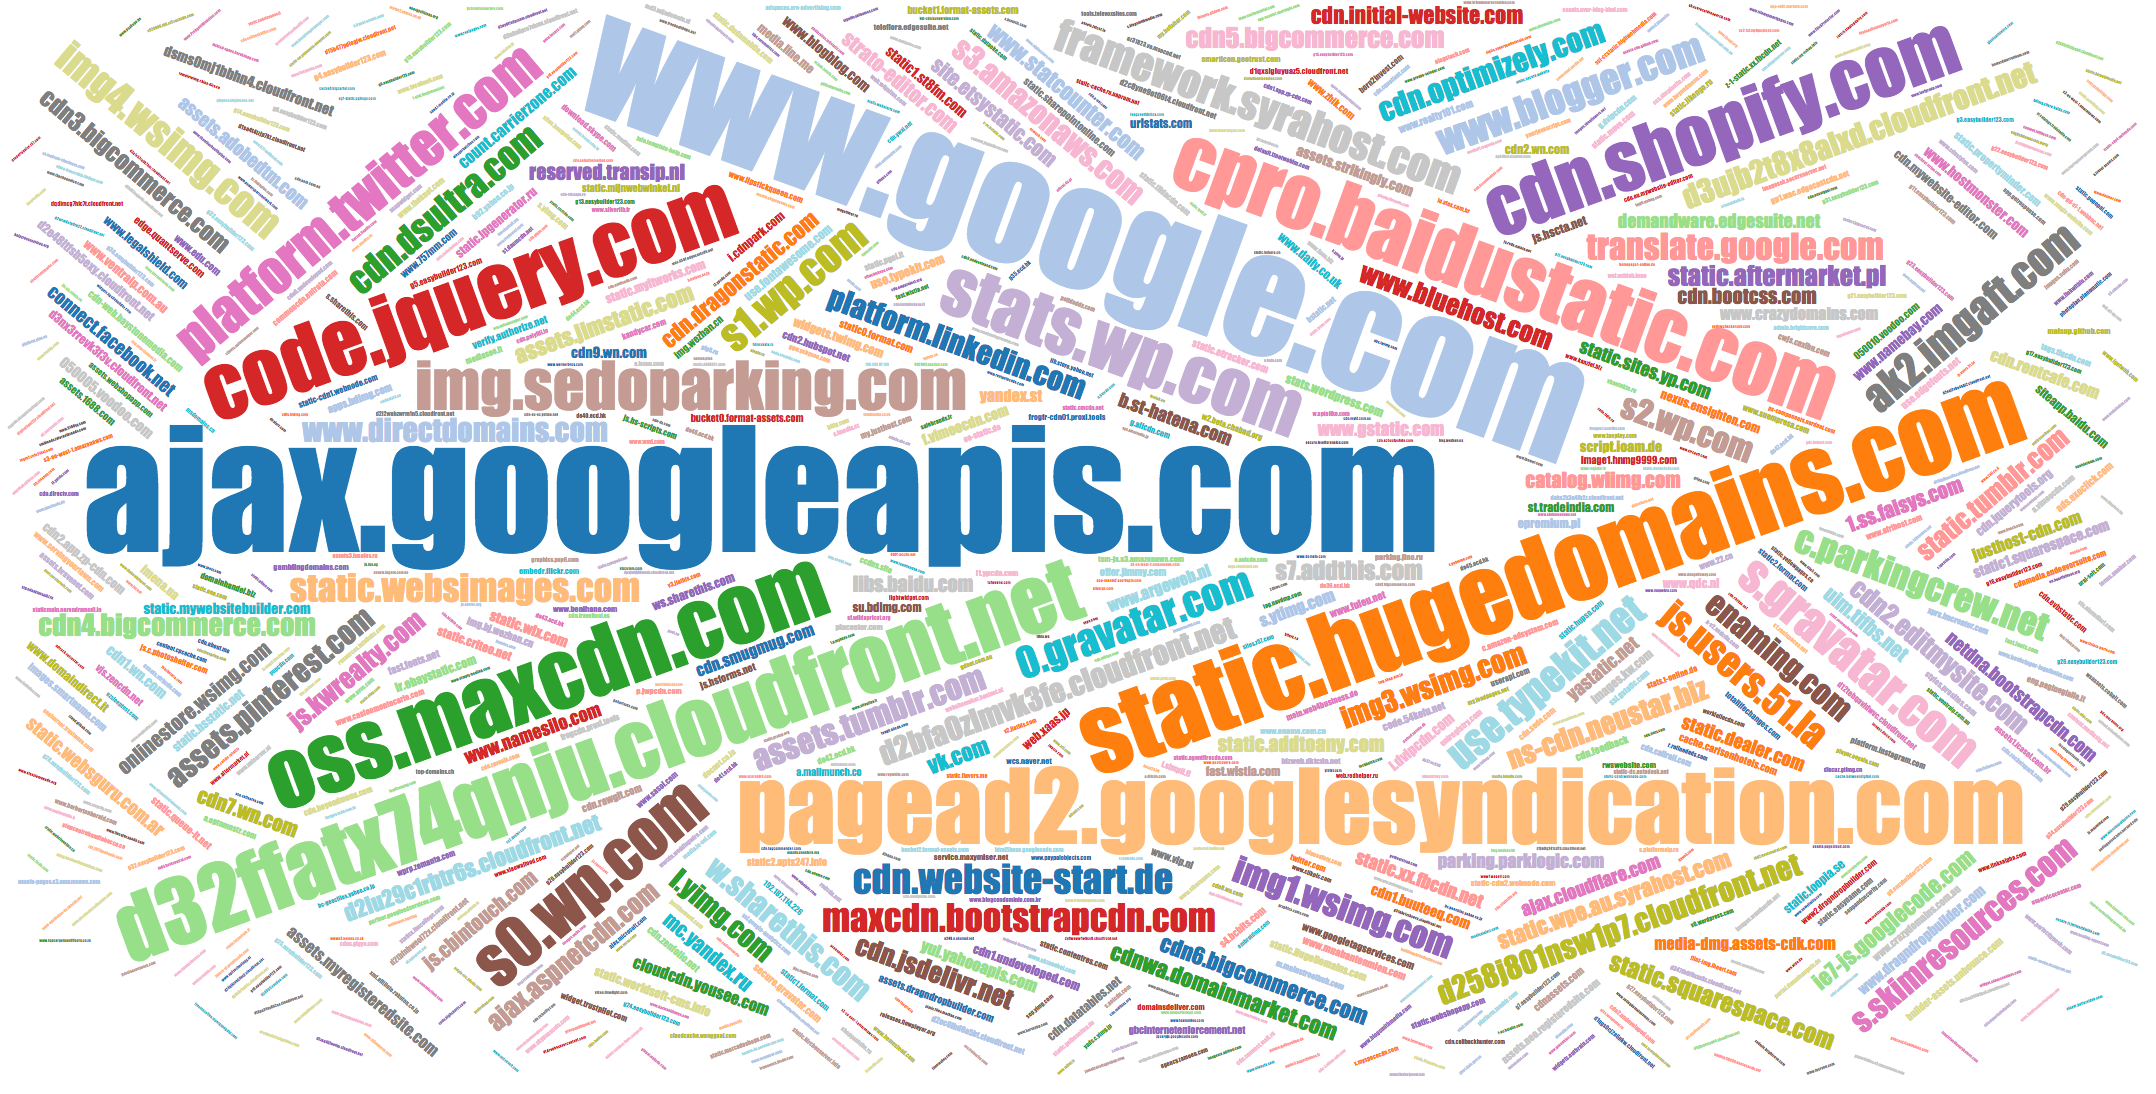 Popular names of JS domains ajax.googleapis.com, apis.google.com, etc.